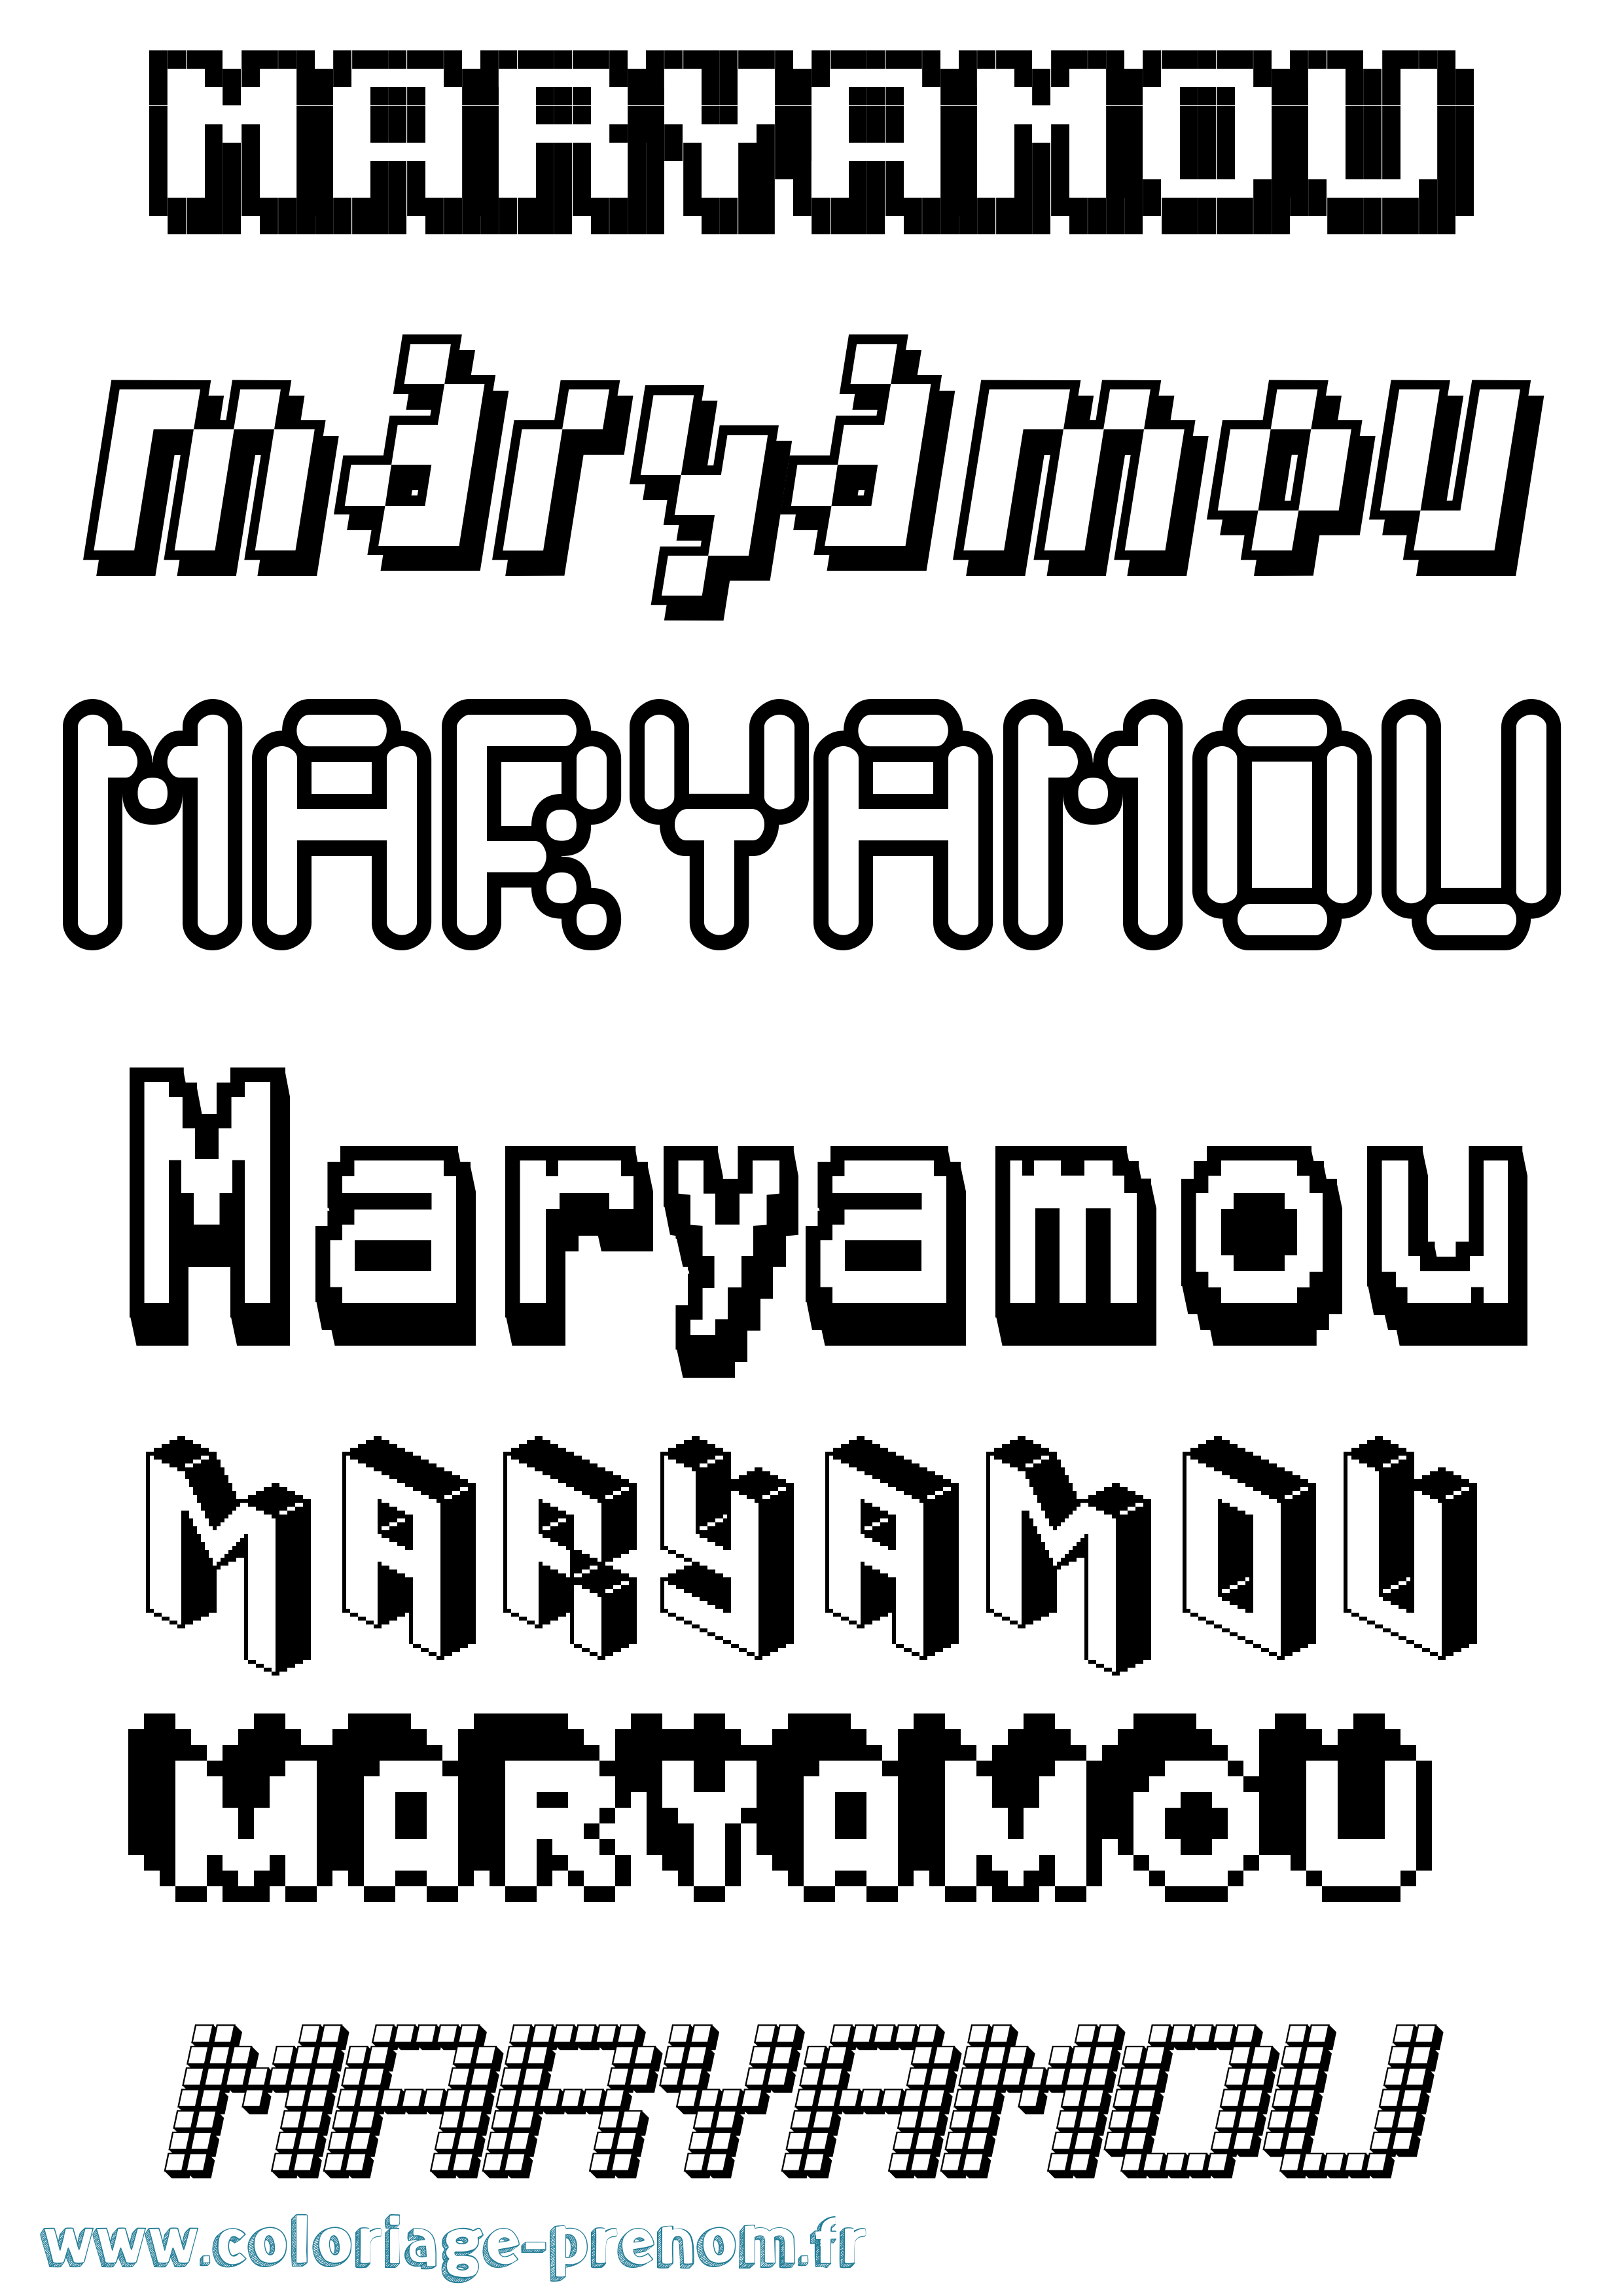 Coloriage prénom Maryamou Pixel